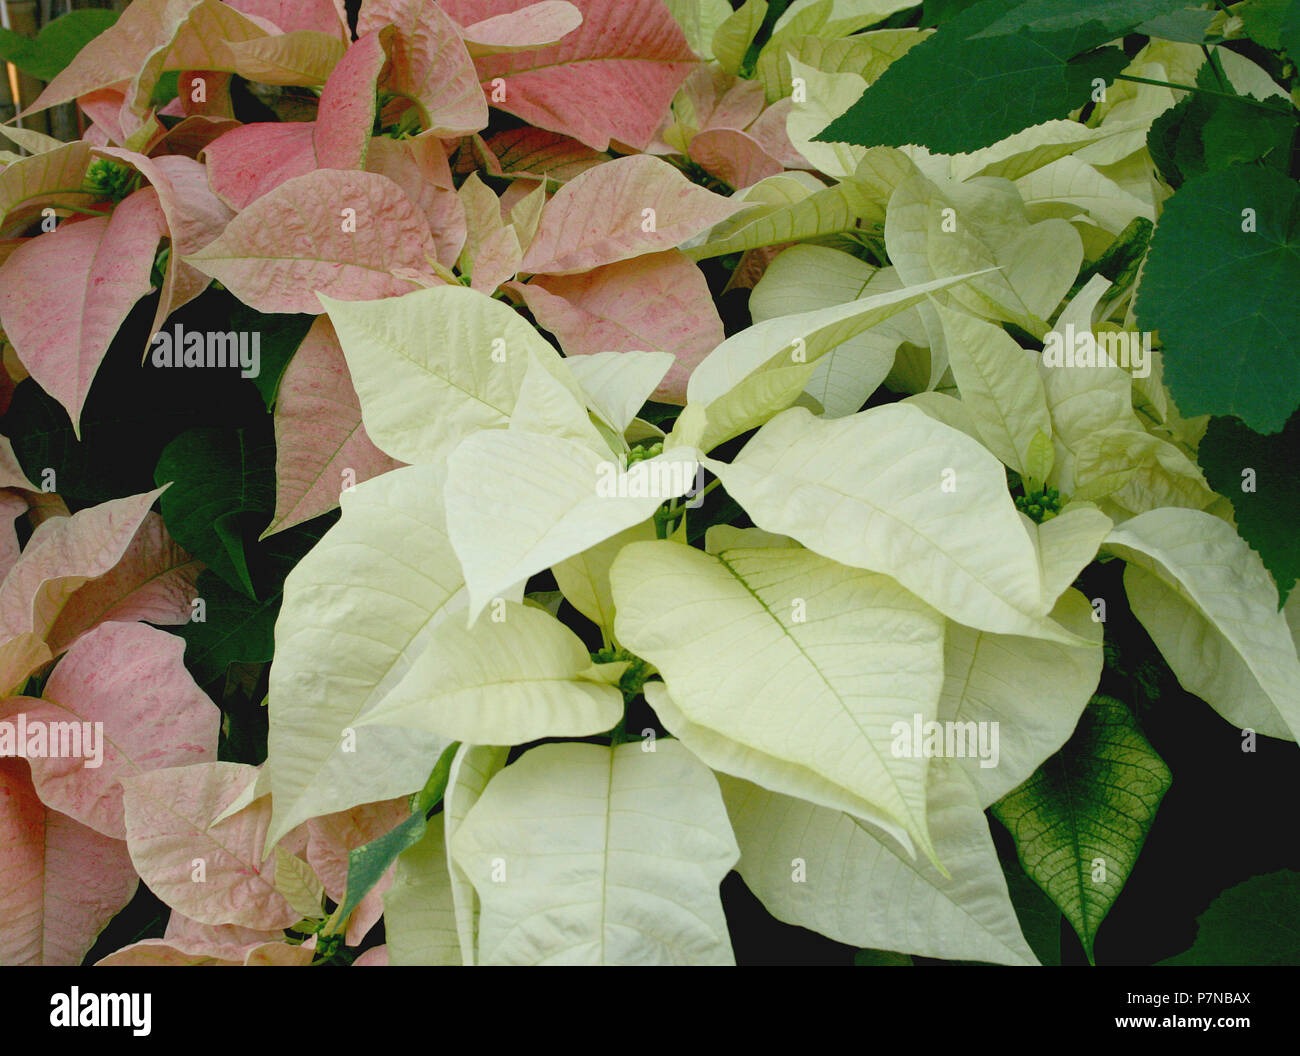 Rosa e Bianco Poinsettia (Euphorbia pulcherrima) Foto Stock